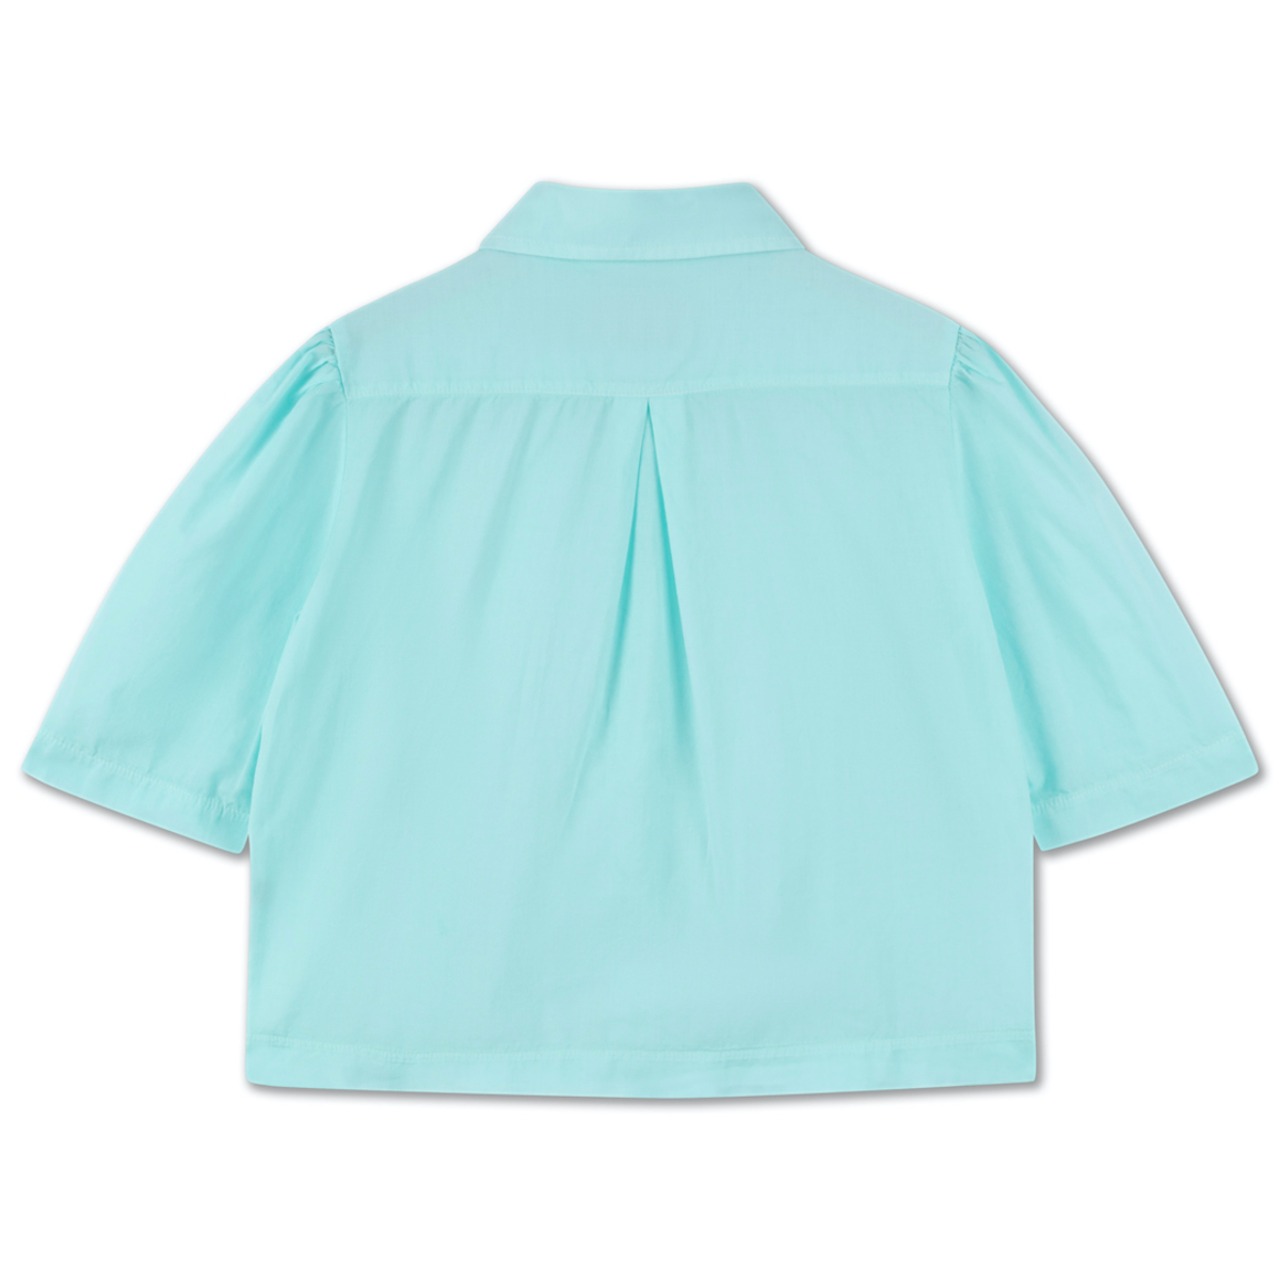 〈 REPOSE AMS 24SS 〉blouse / aqua light